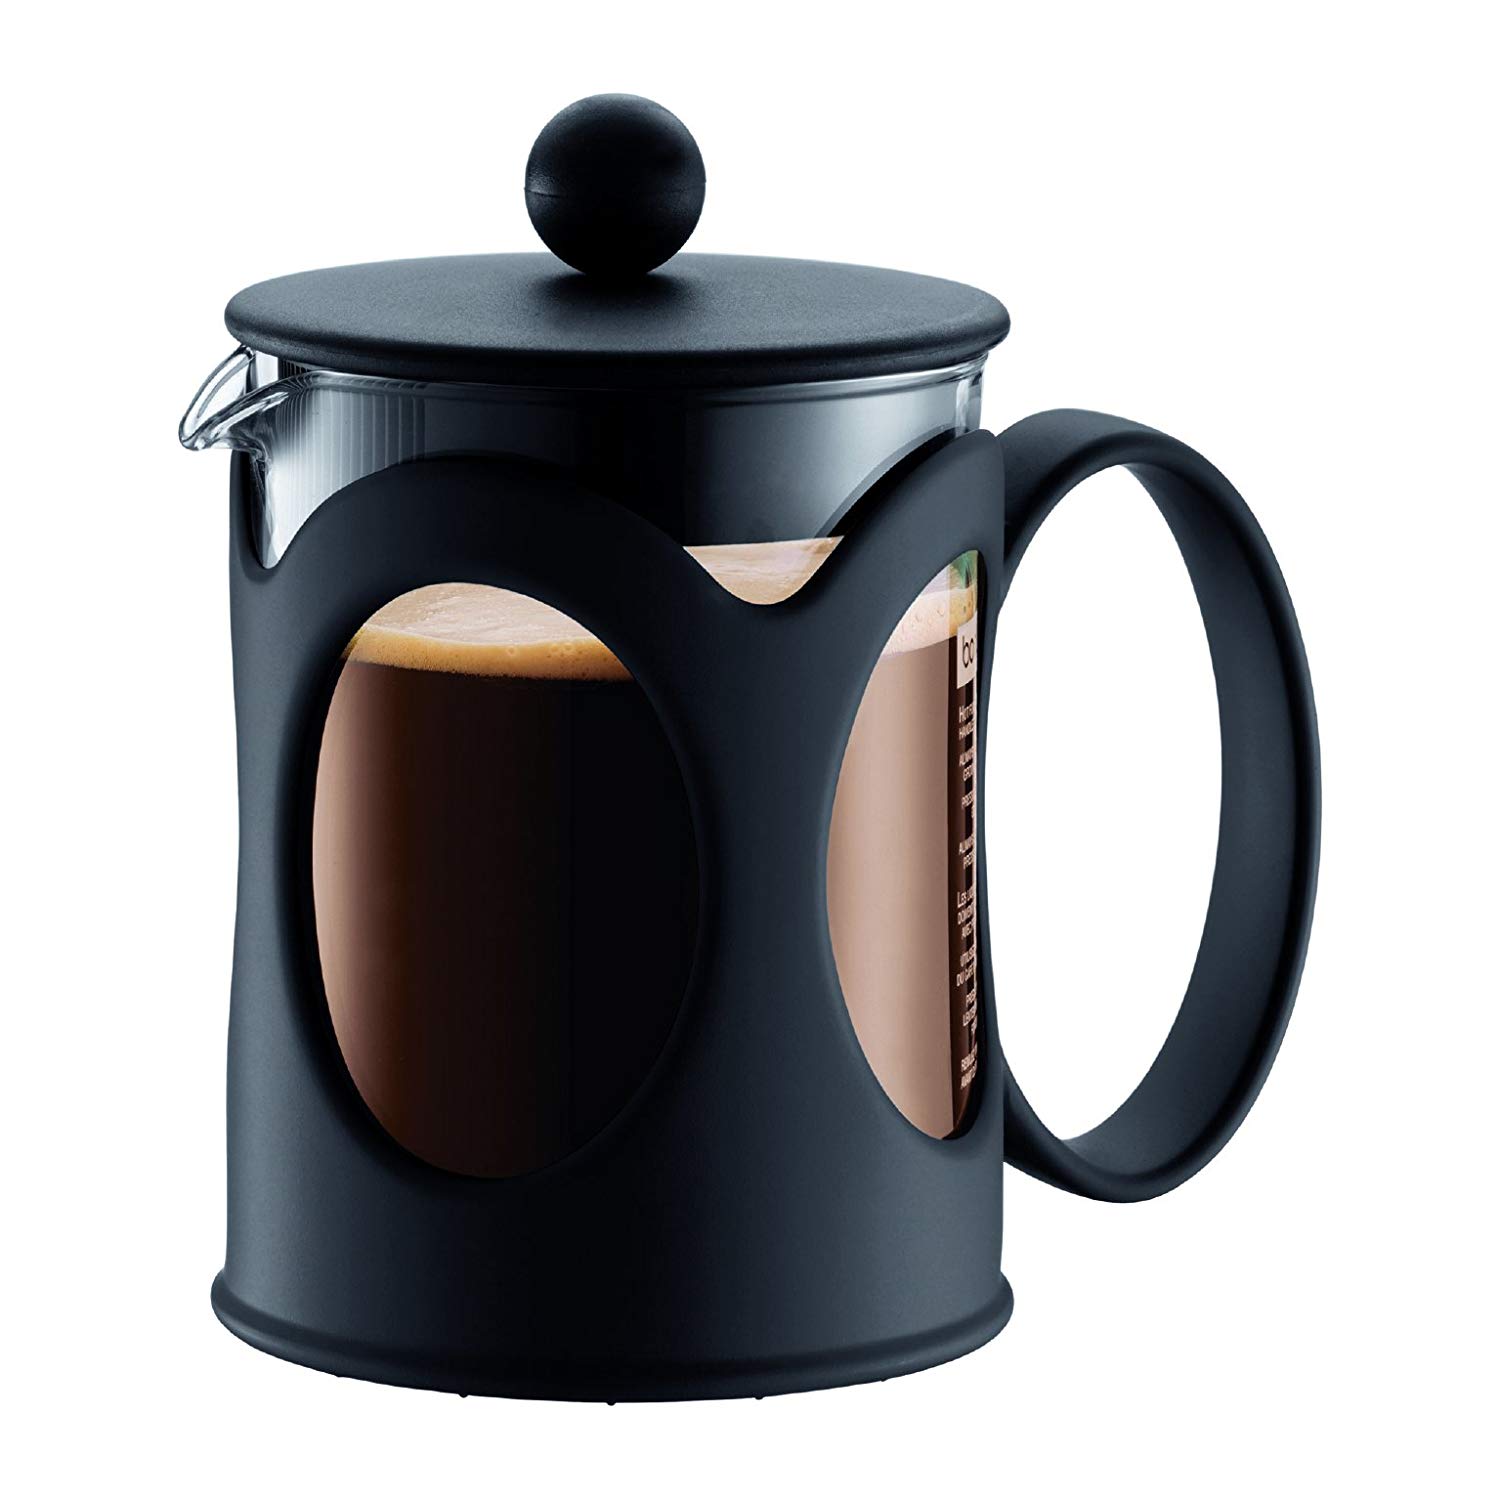 Bodum Kenya Coffee Maker, 4 Cup - Black